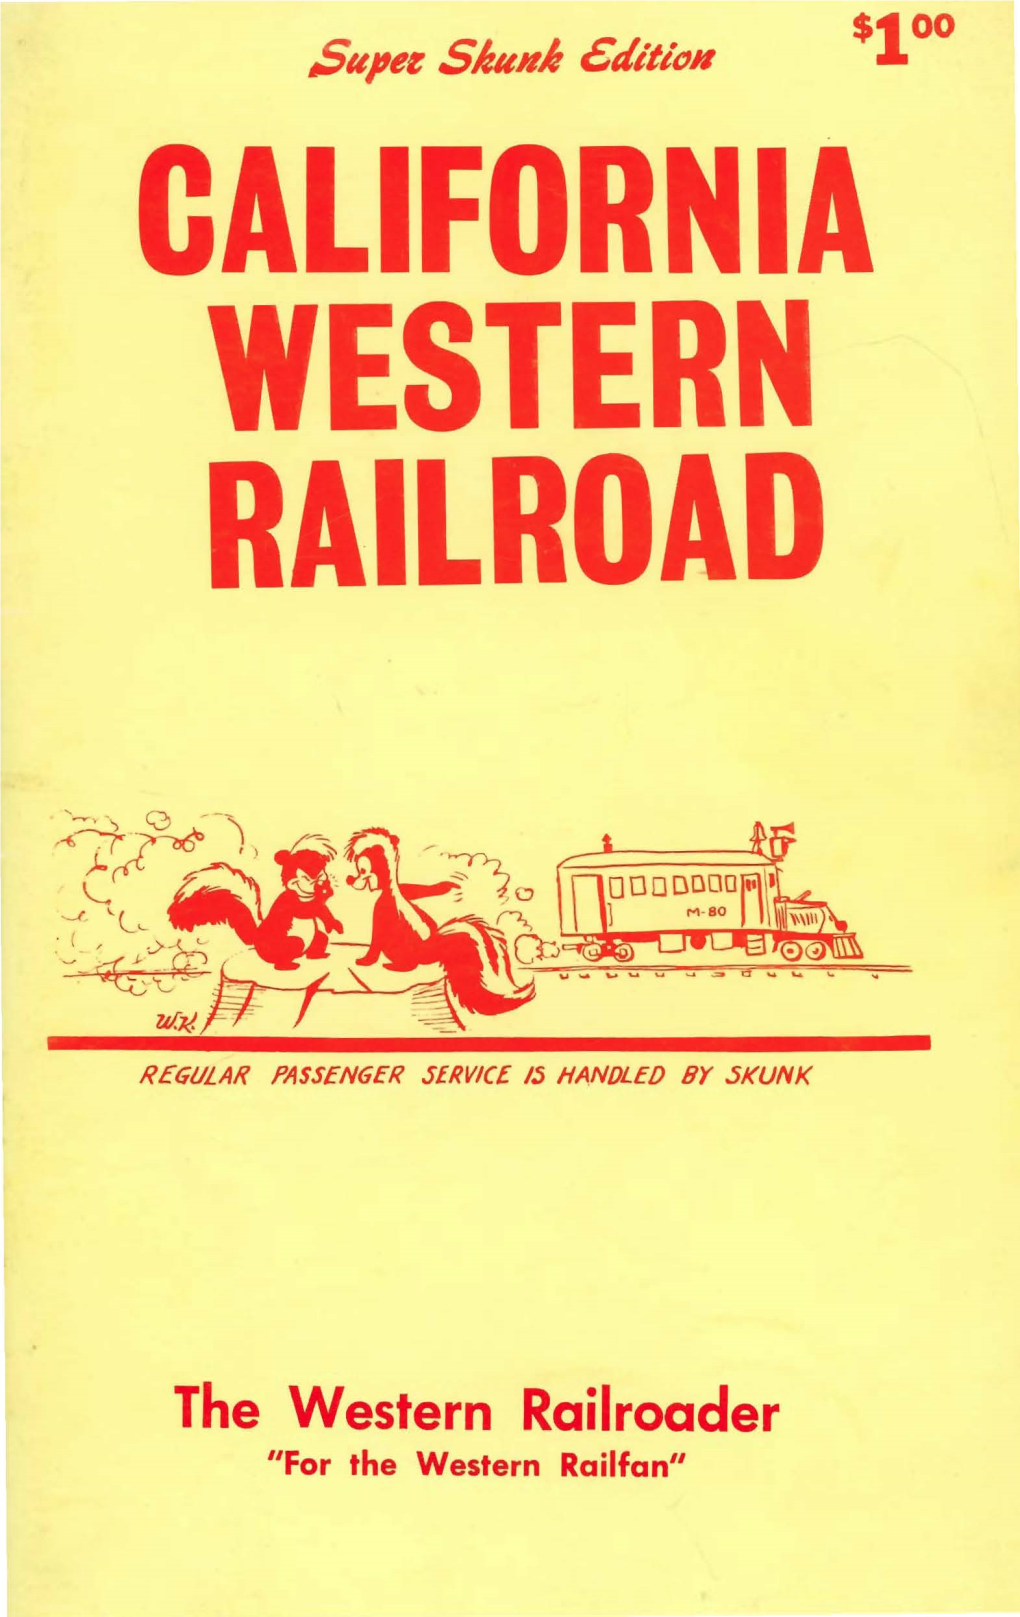 The Western Railroader "For the Western Railfan"